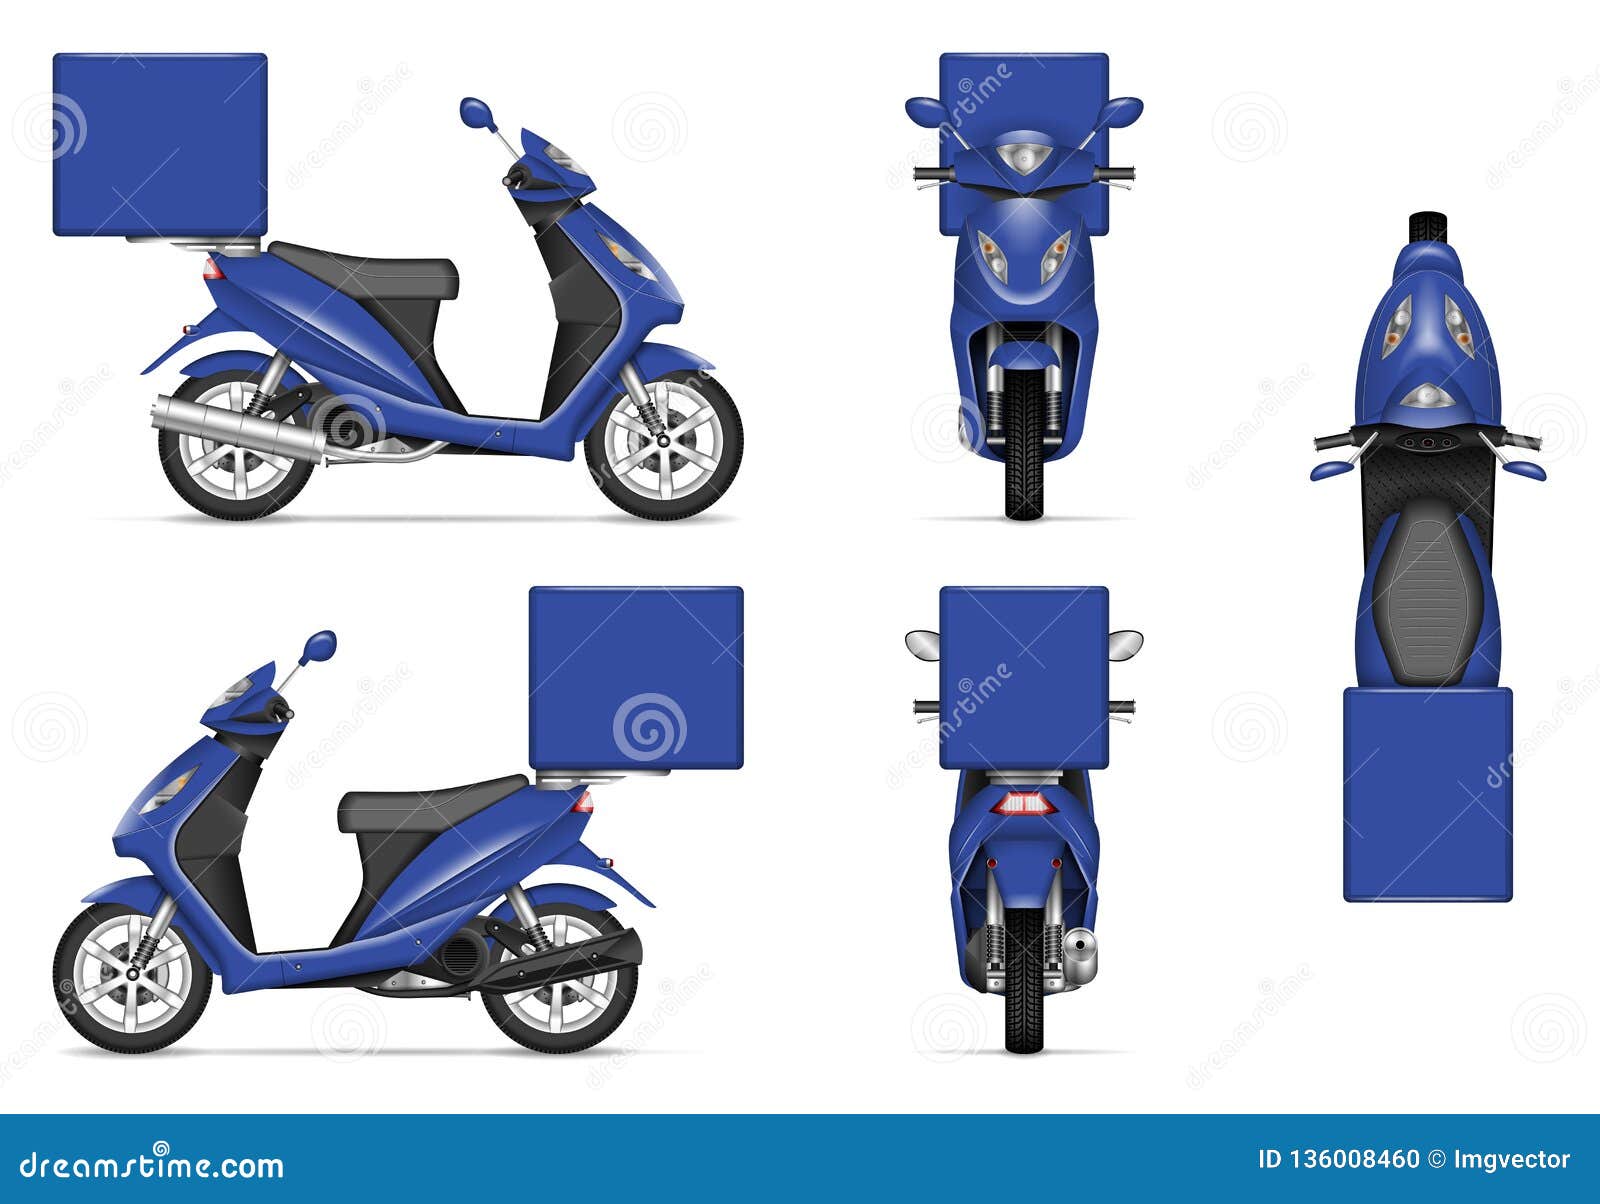 Download Realistic Blue Motorcycle Vector Mock-up Stock Vector ...